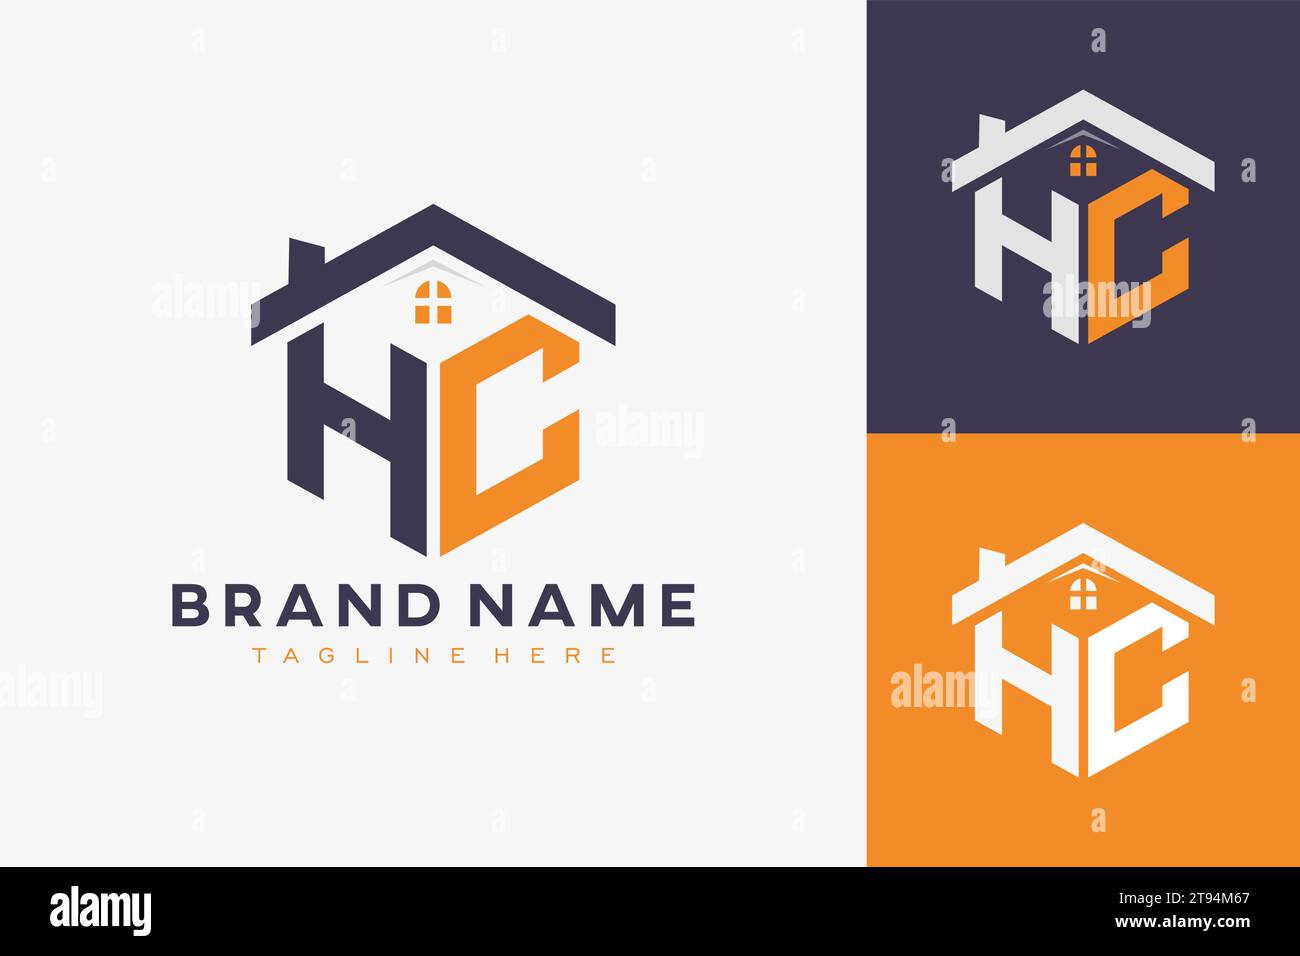 Sechskantiges HC-House-Monogramm-Logo für Immobilien, Immobilien, Bauunternehmen. Box-förmige Initiale mit fav-Symbolen Vektorgrafik templ Stock Vektor